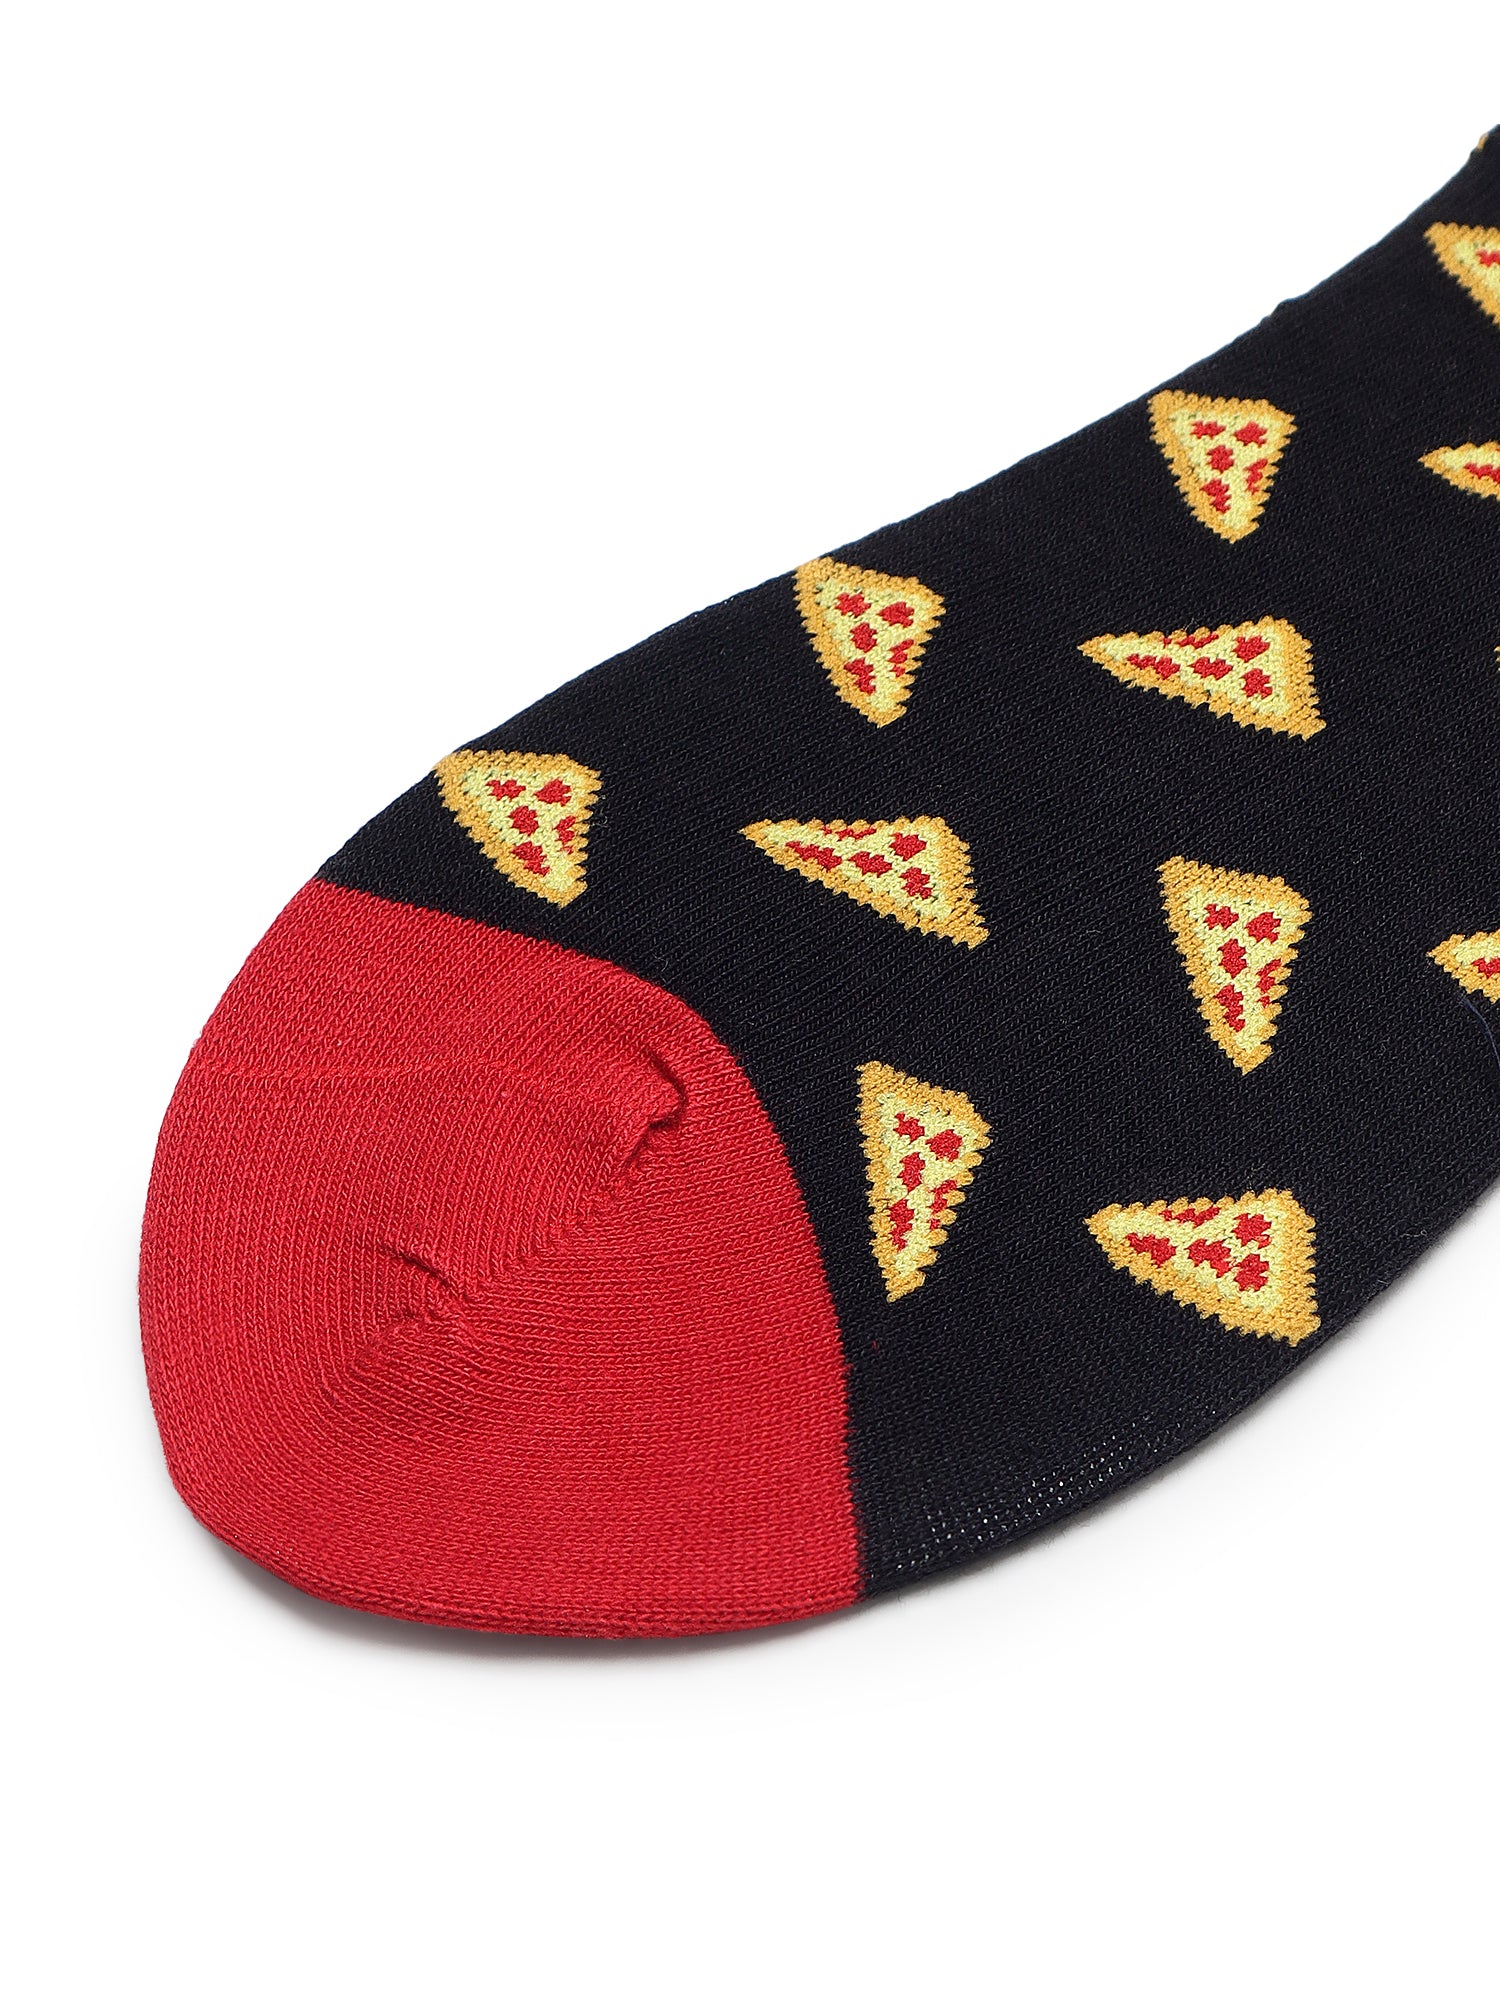 Pizza is Bae Socks